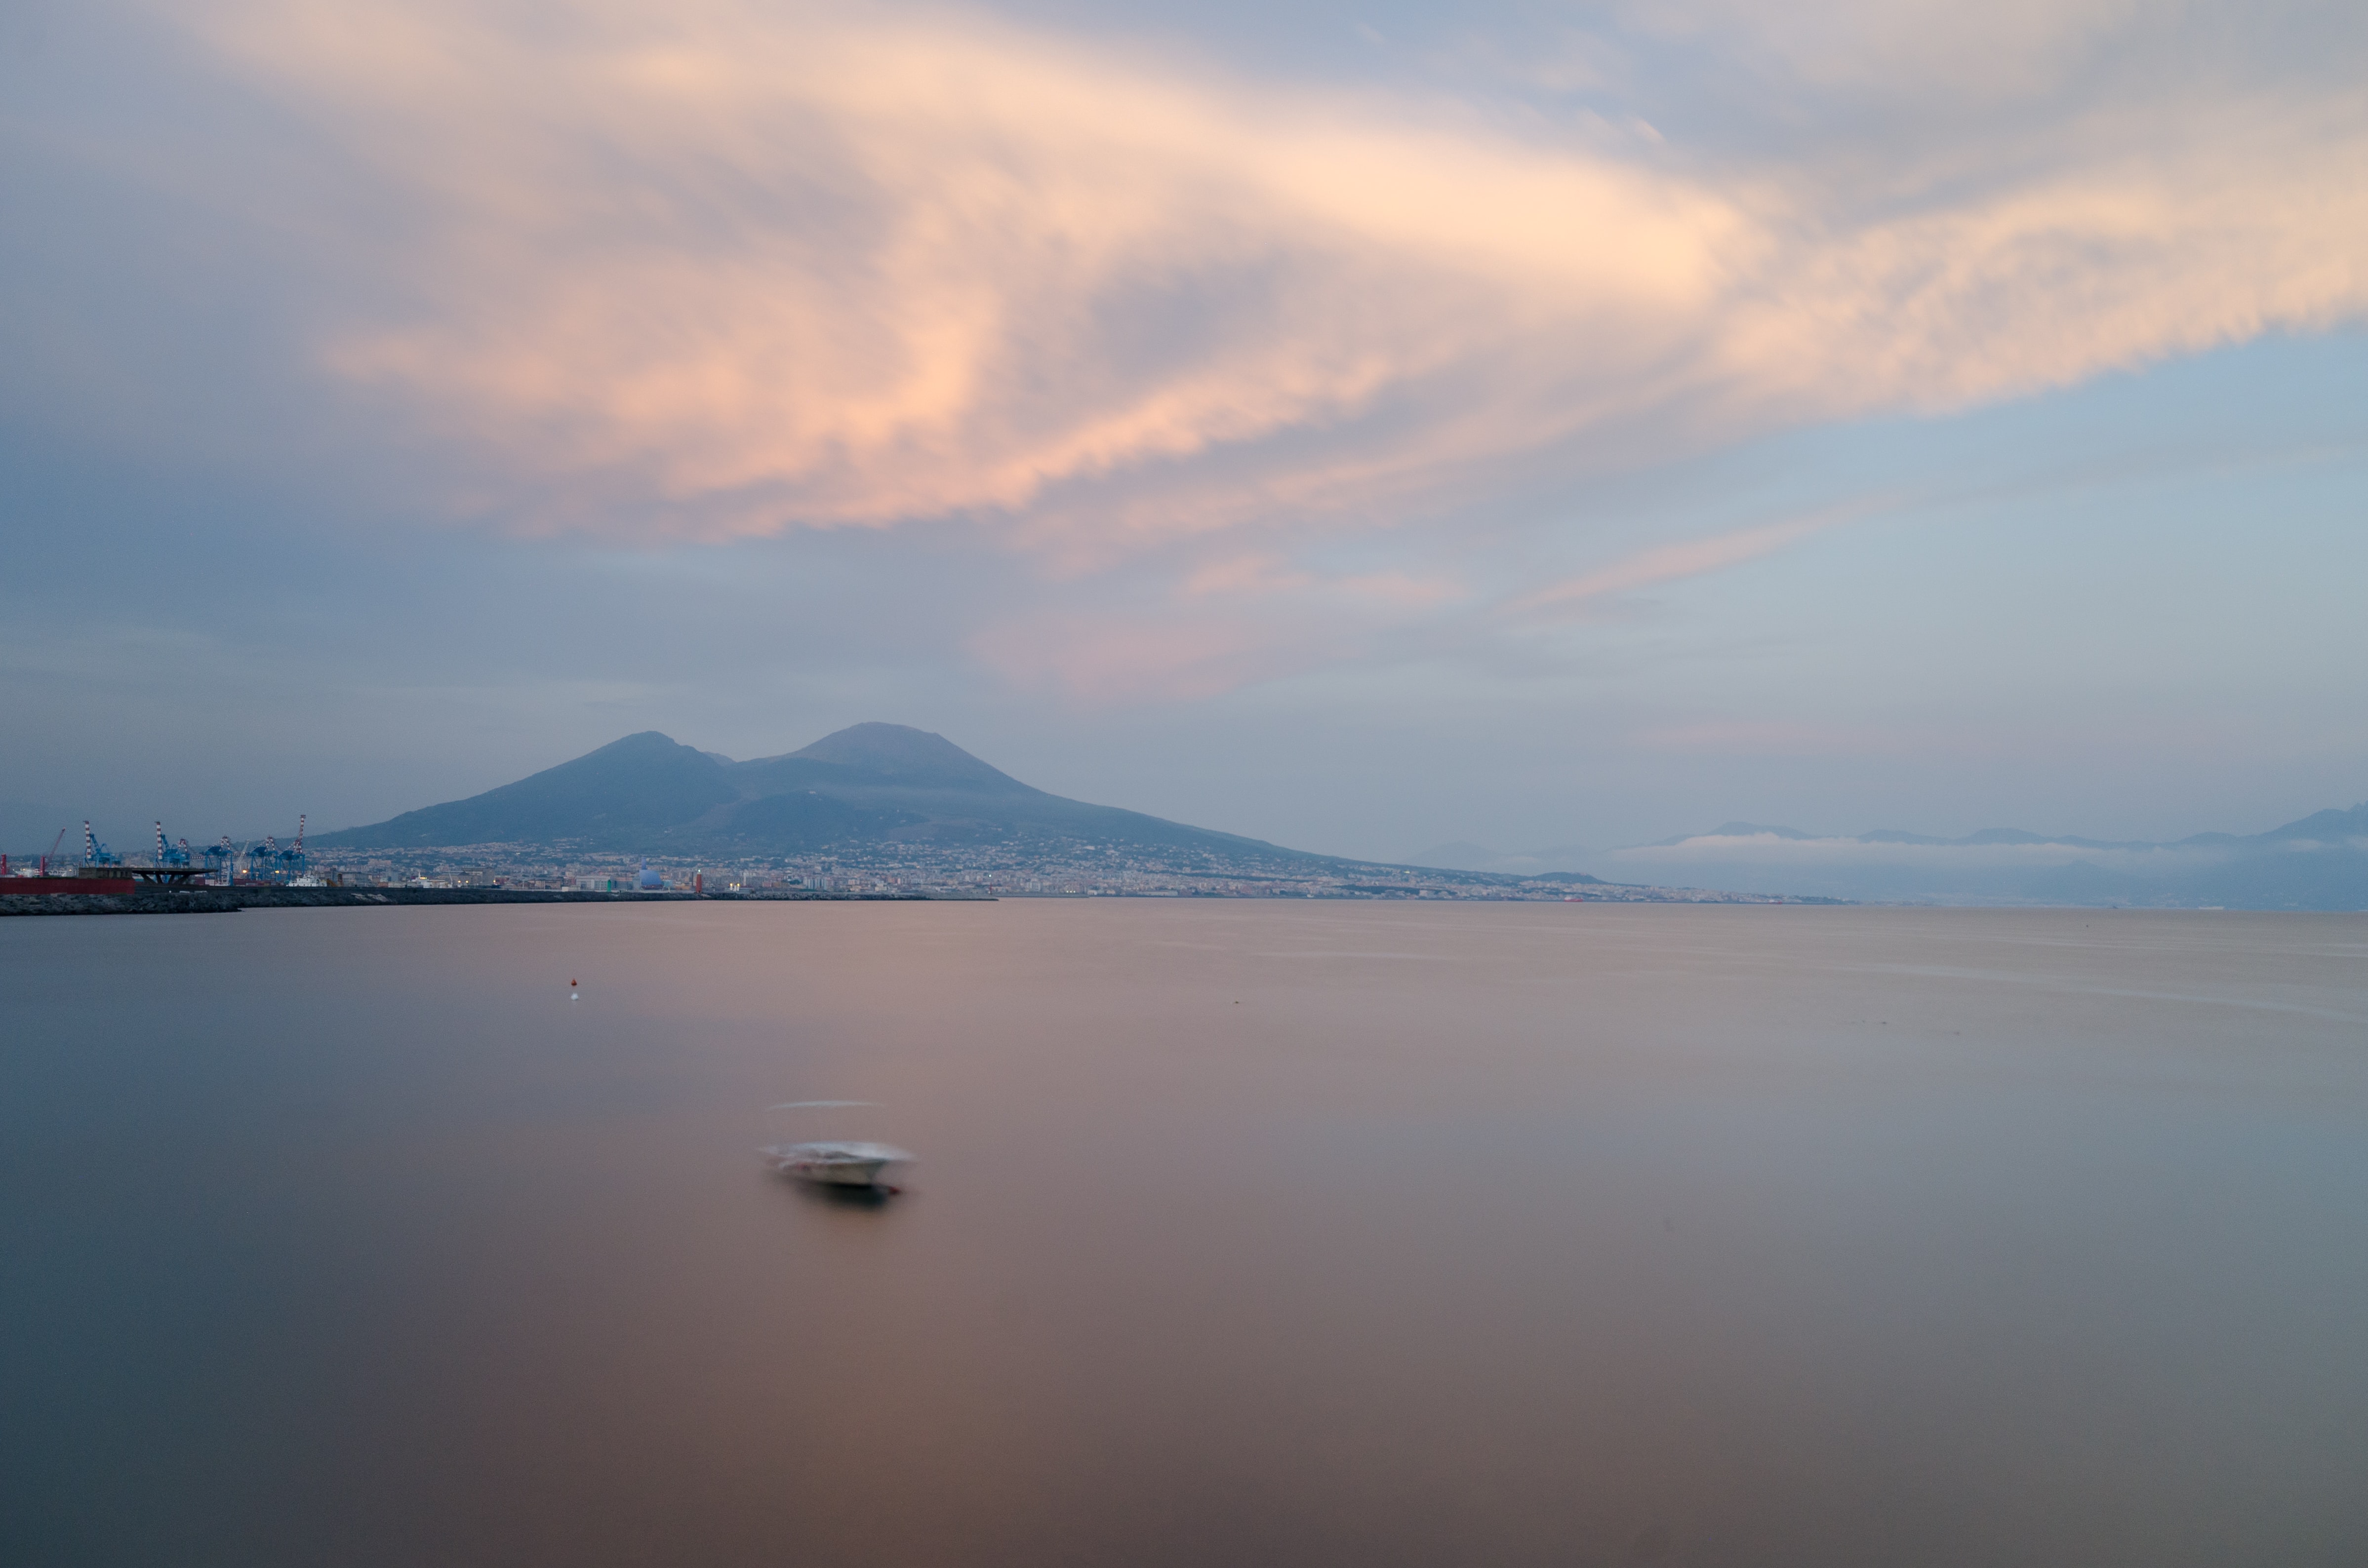 Naples, panoramic view of the Vesuvio